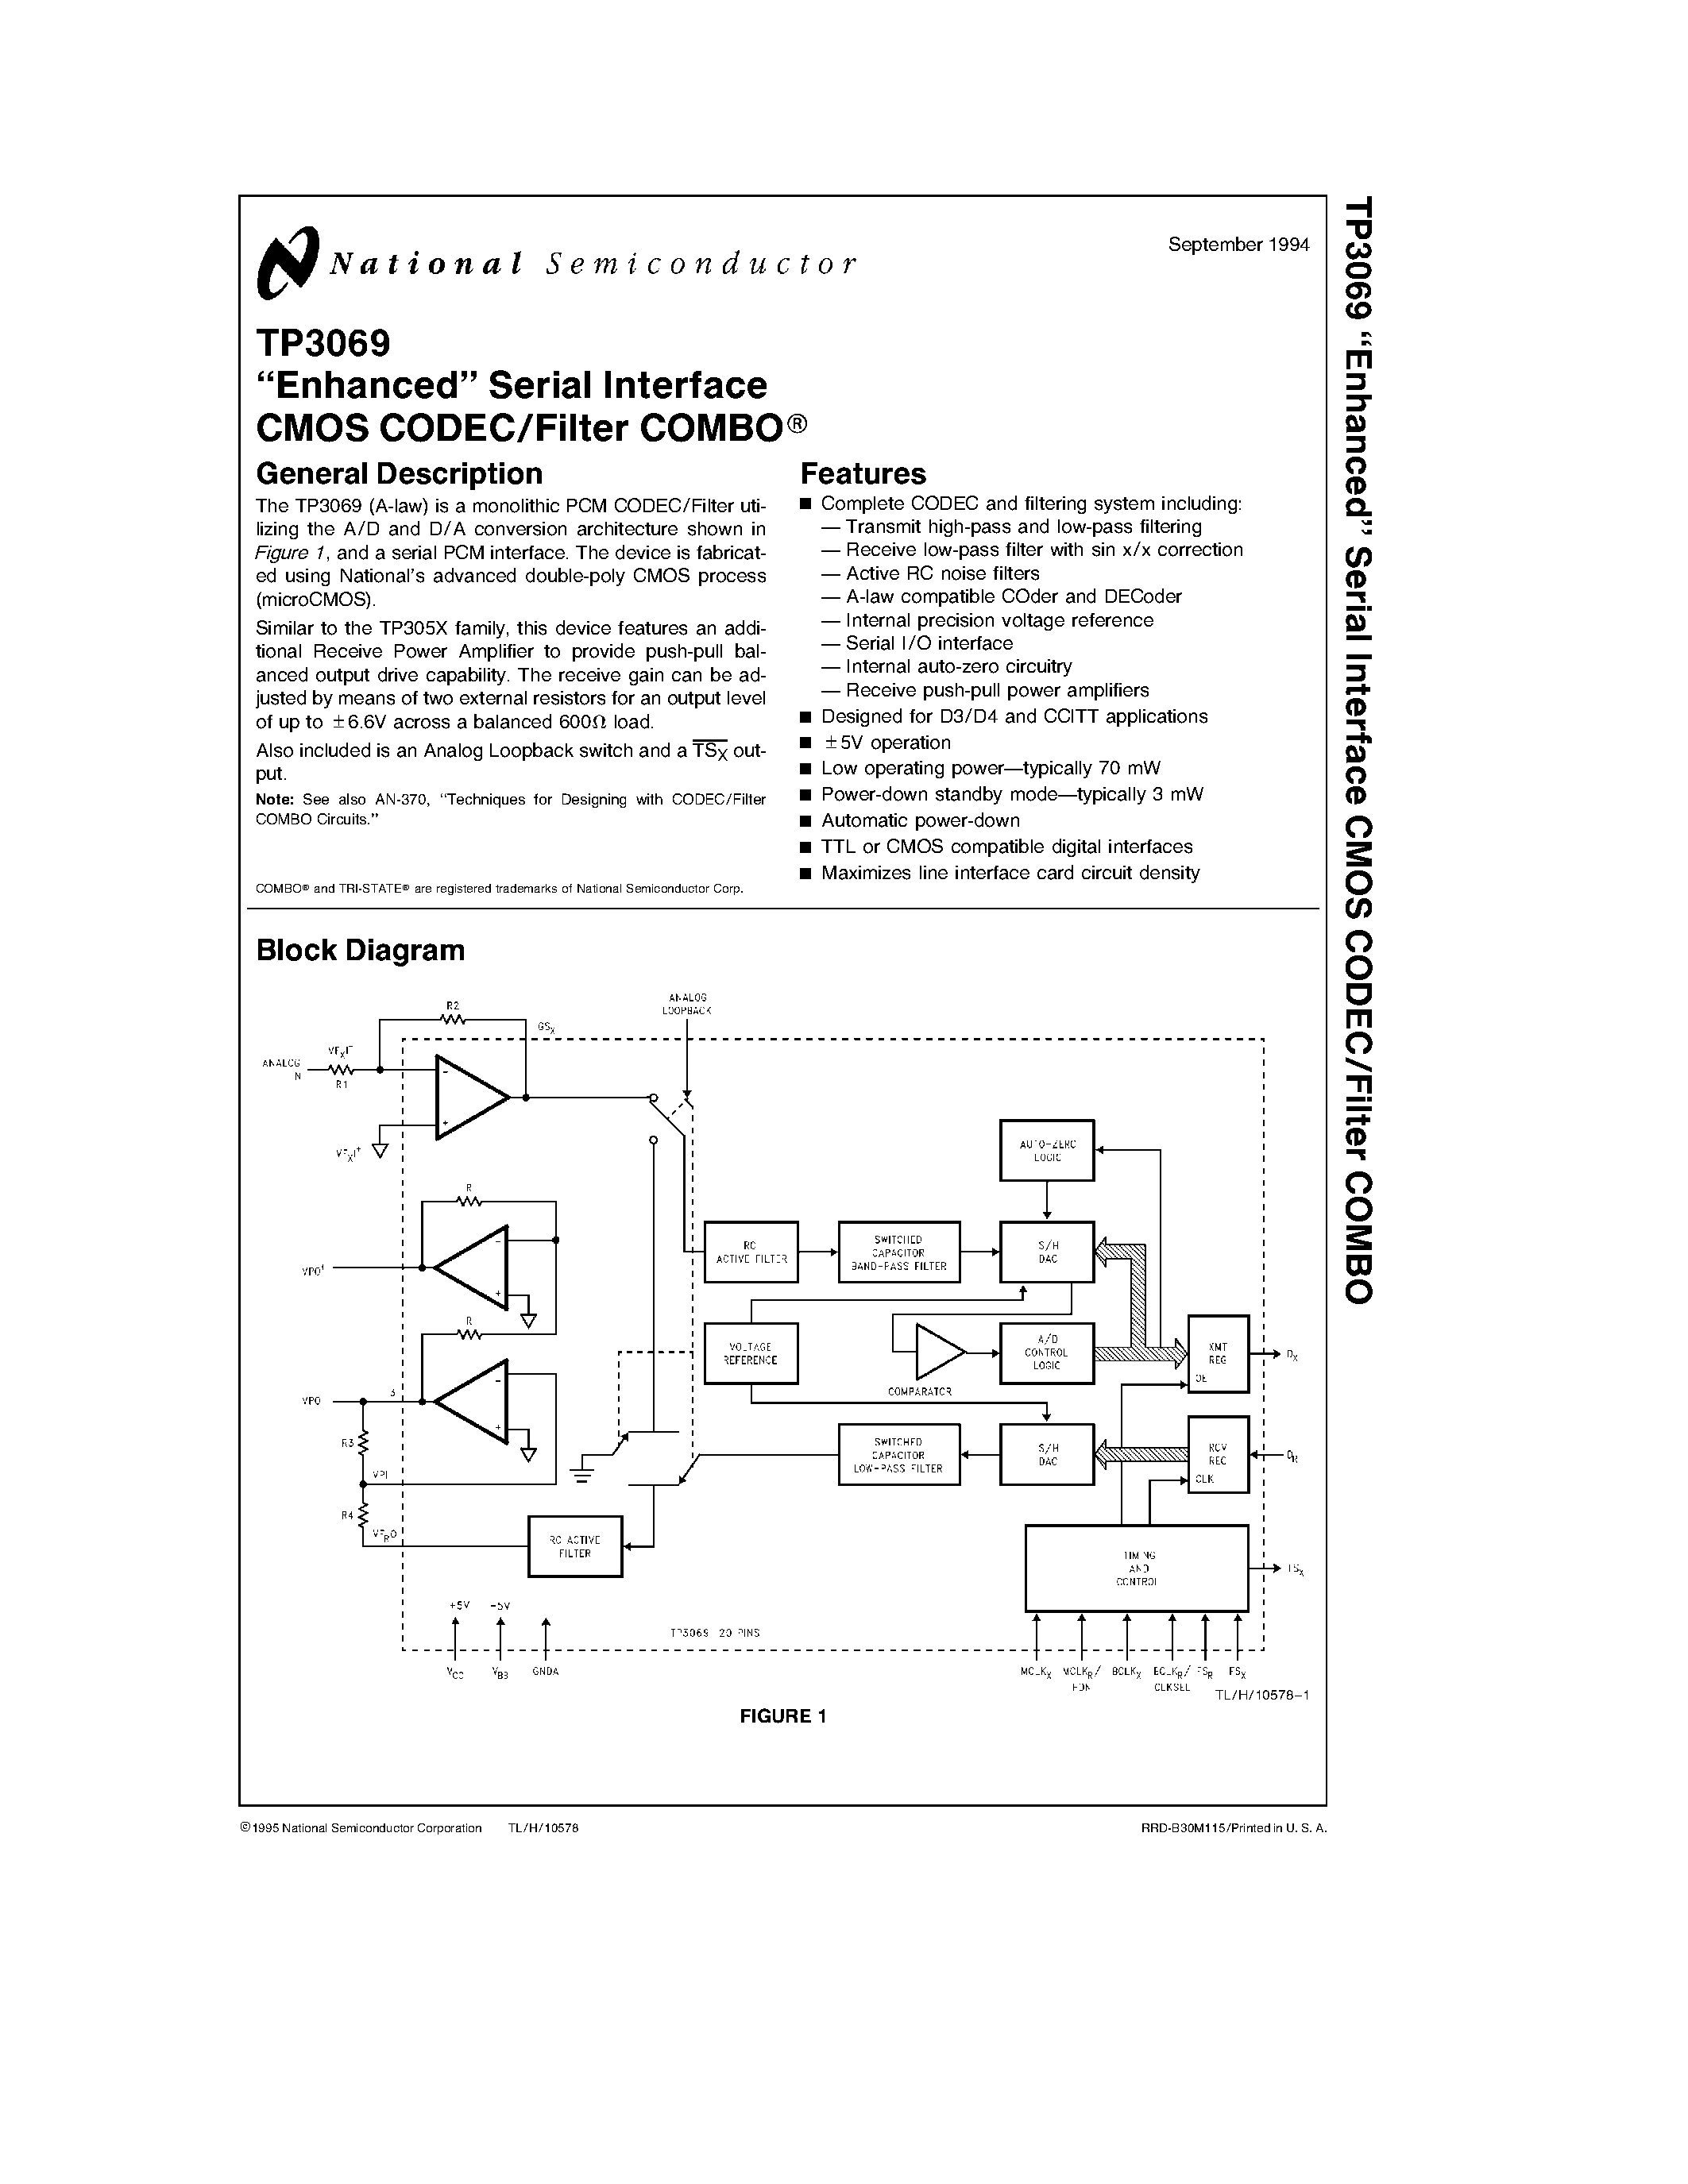 Даташит TP3069V - Enhanced Serial Interface CMOS CODEC/Filter COMBO страница 1